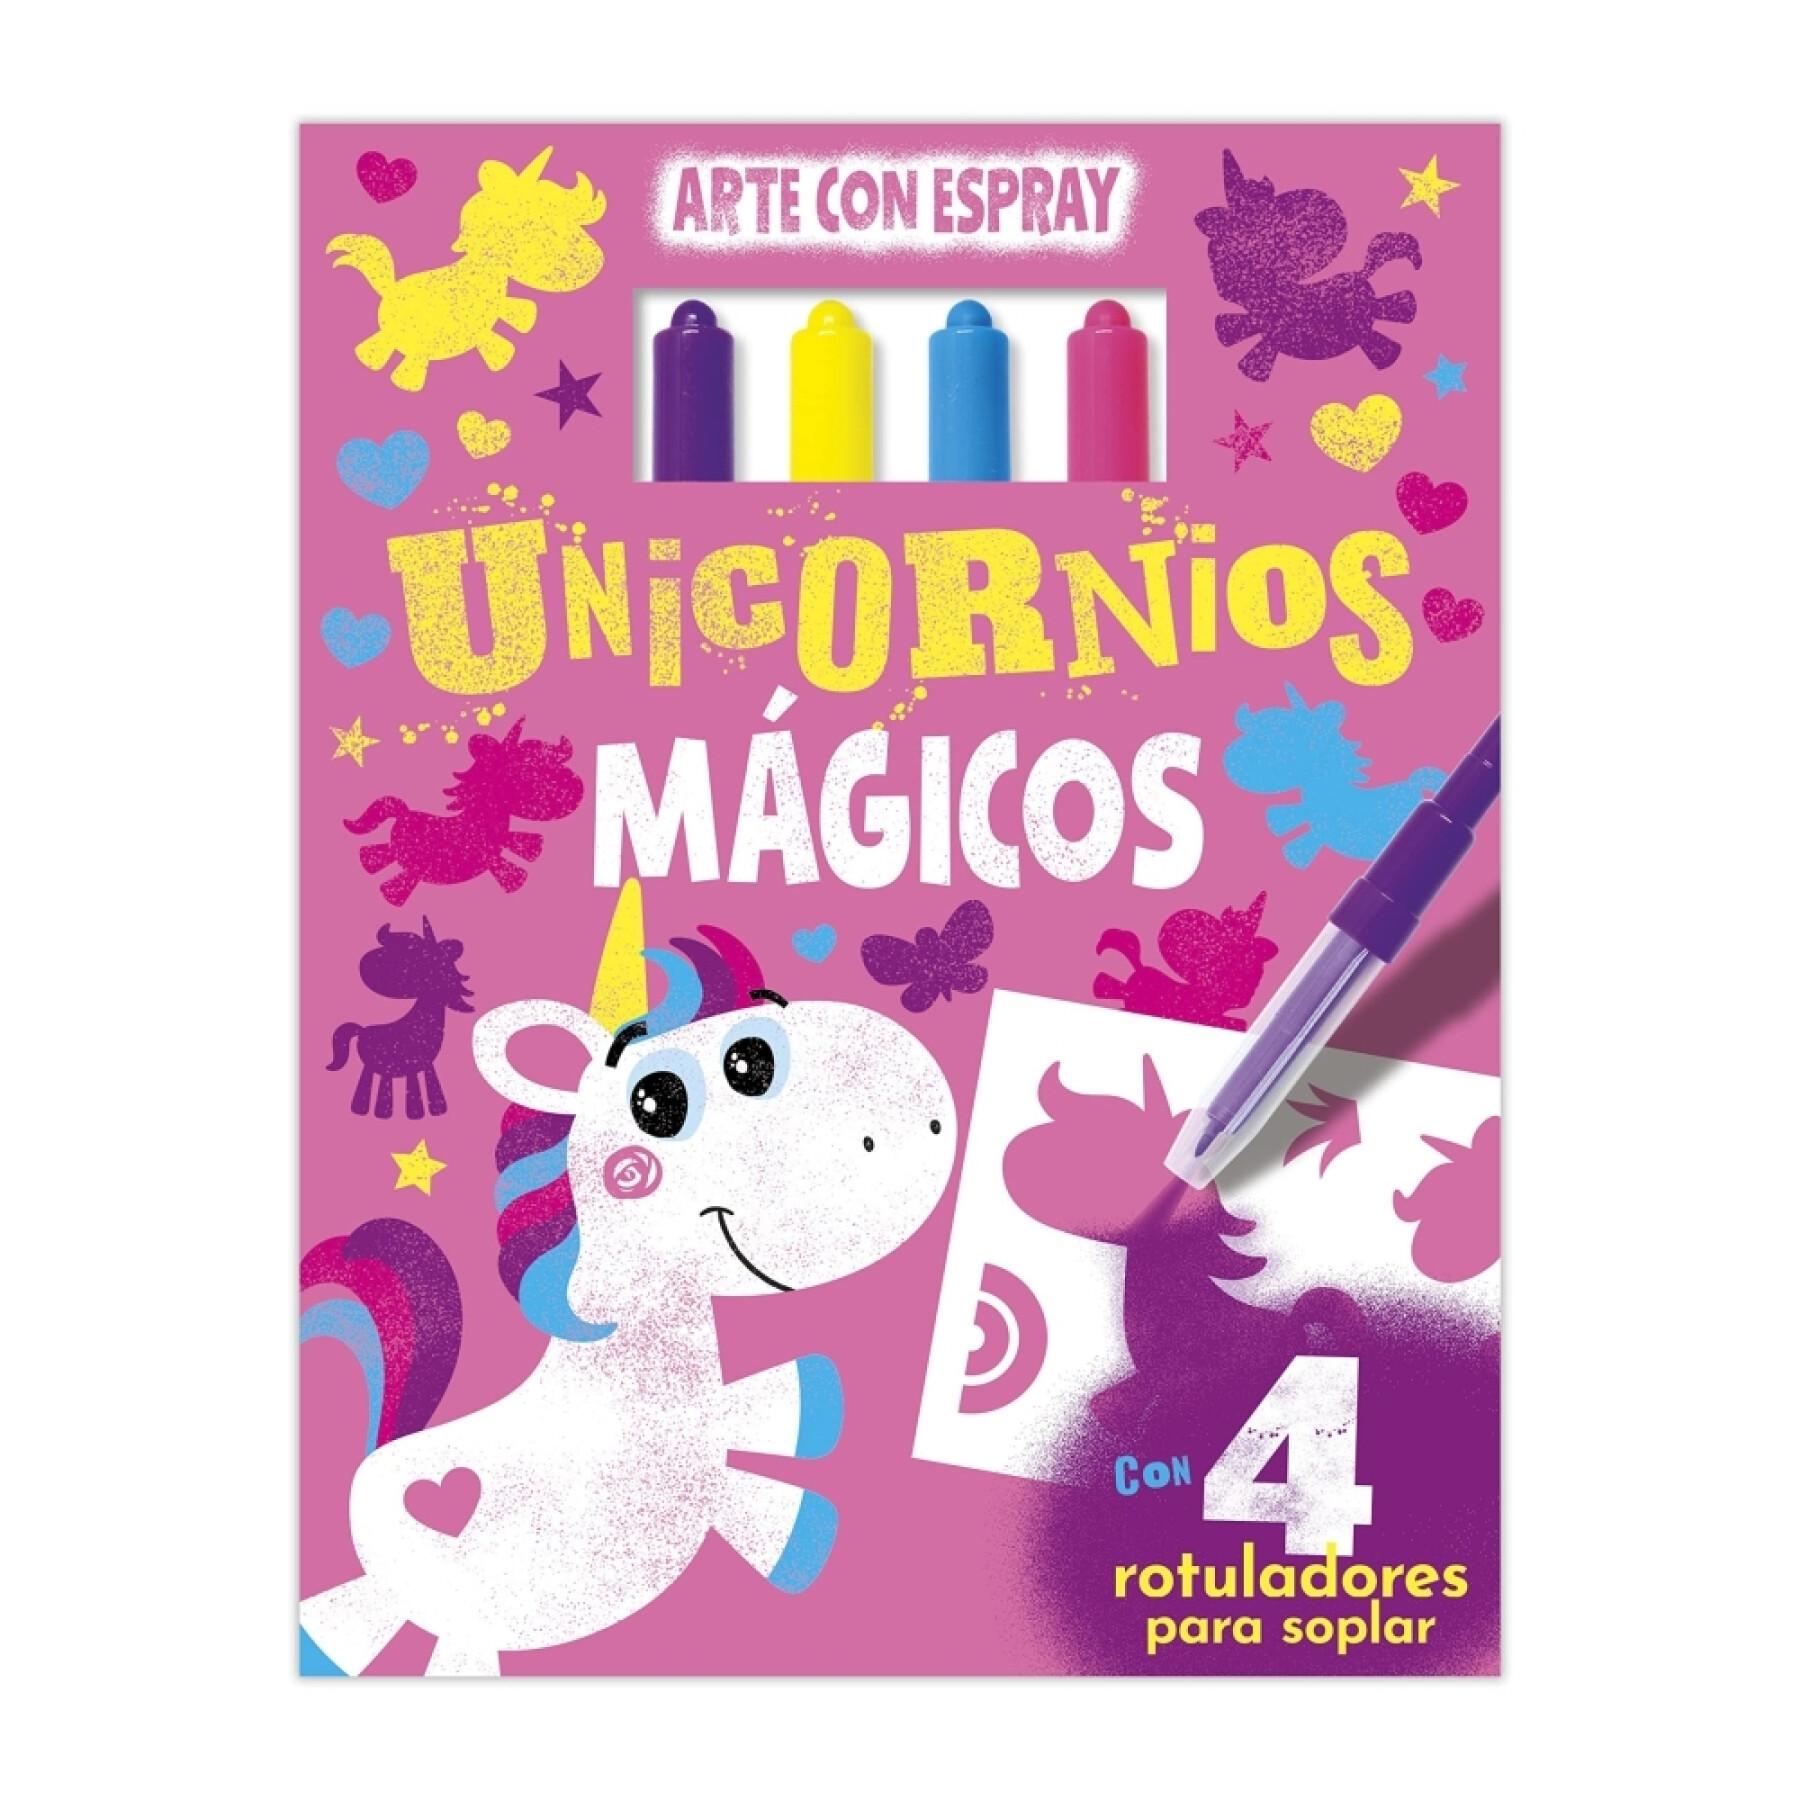 Magic unicorns spray art activity book Edibook